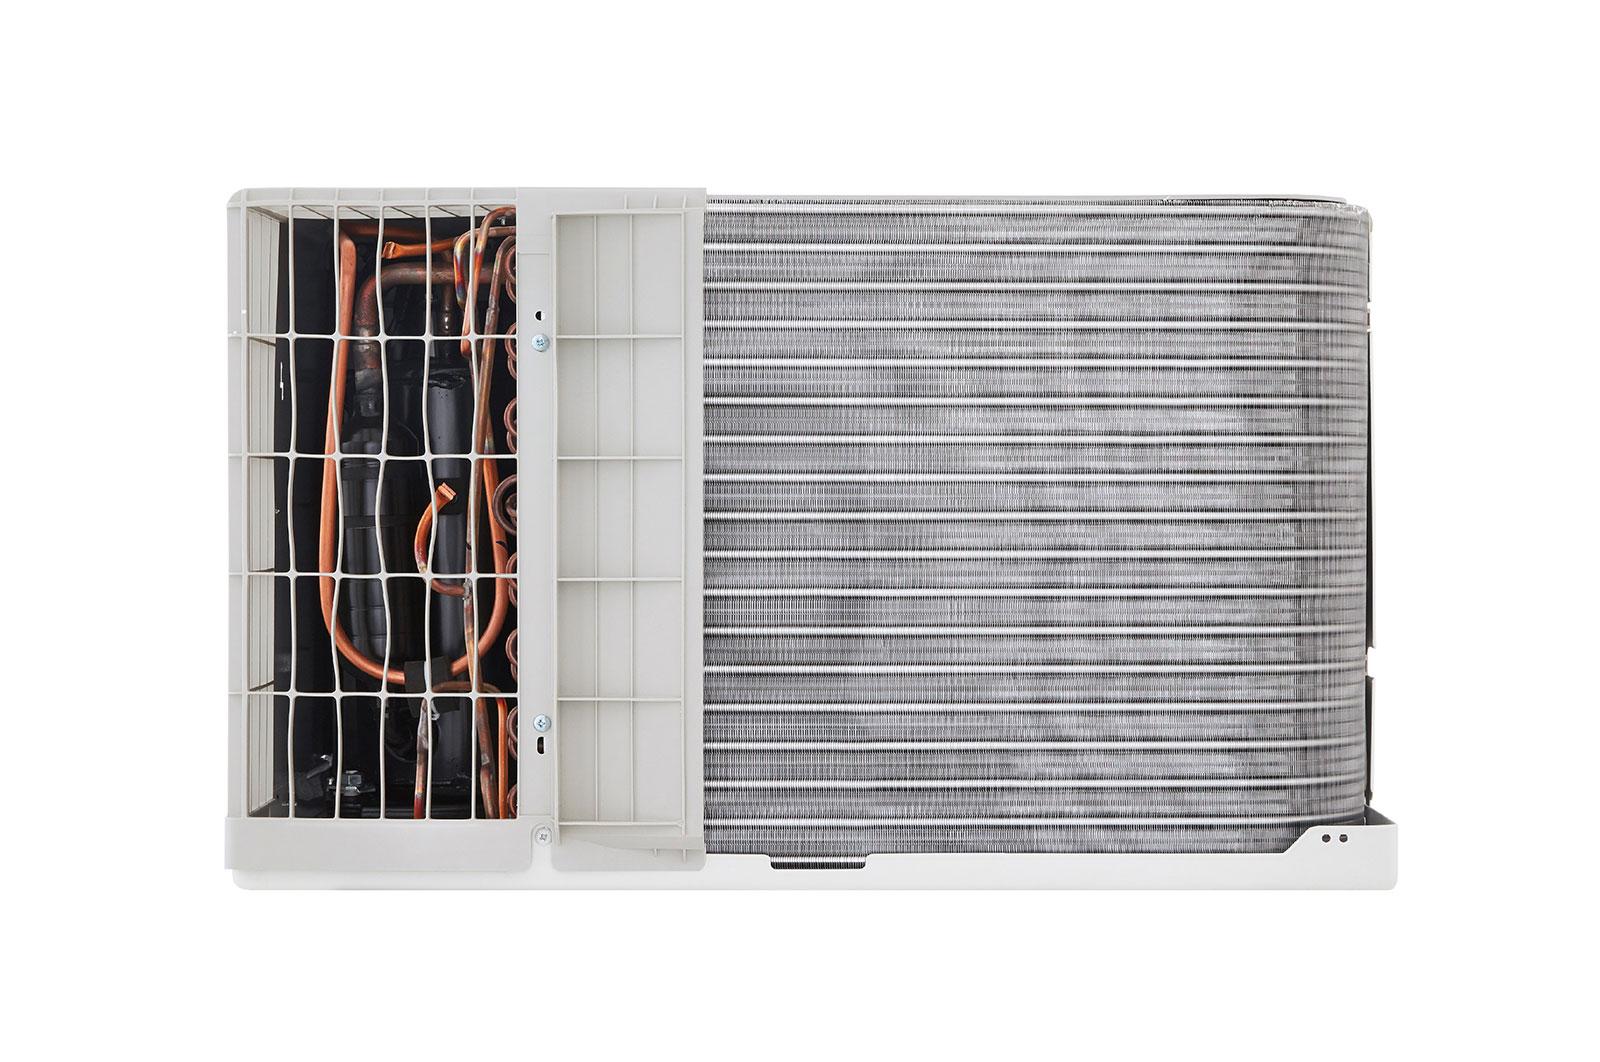 Lg 10,000 BTU 230v Through-the-Wall Air Conditioner with Heat